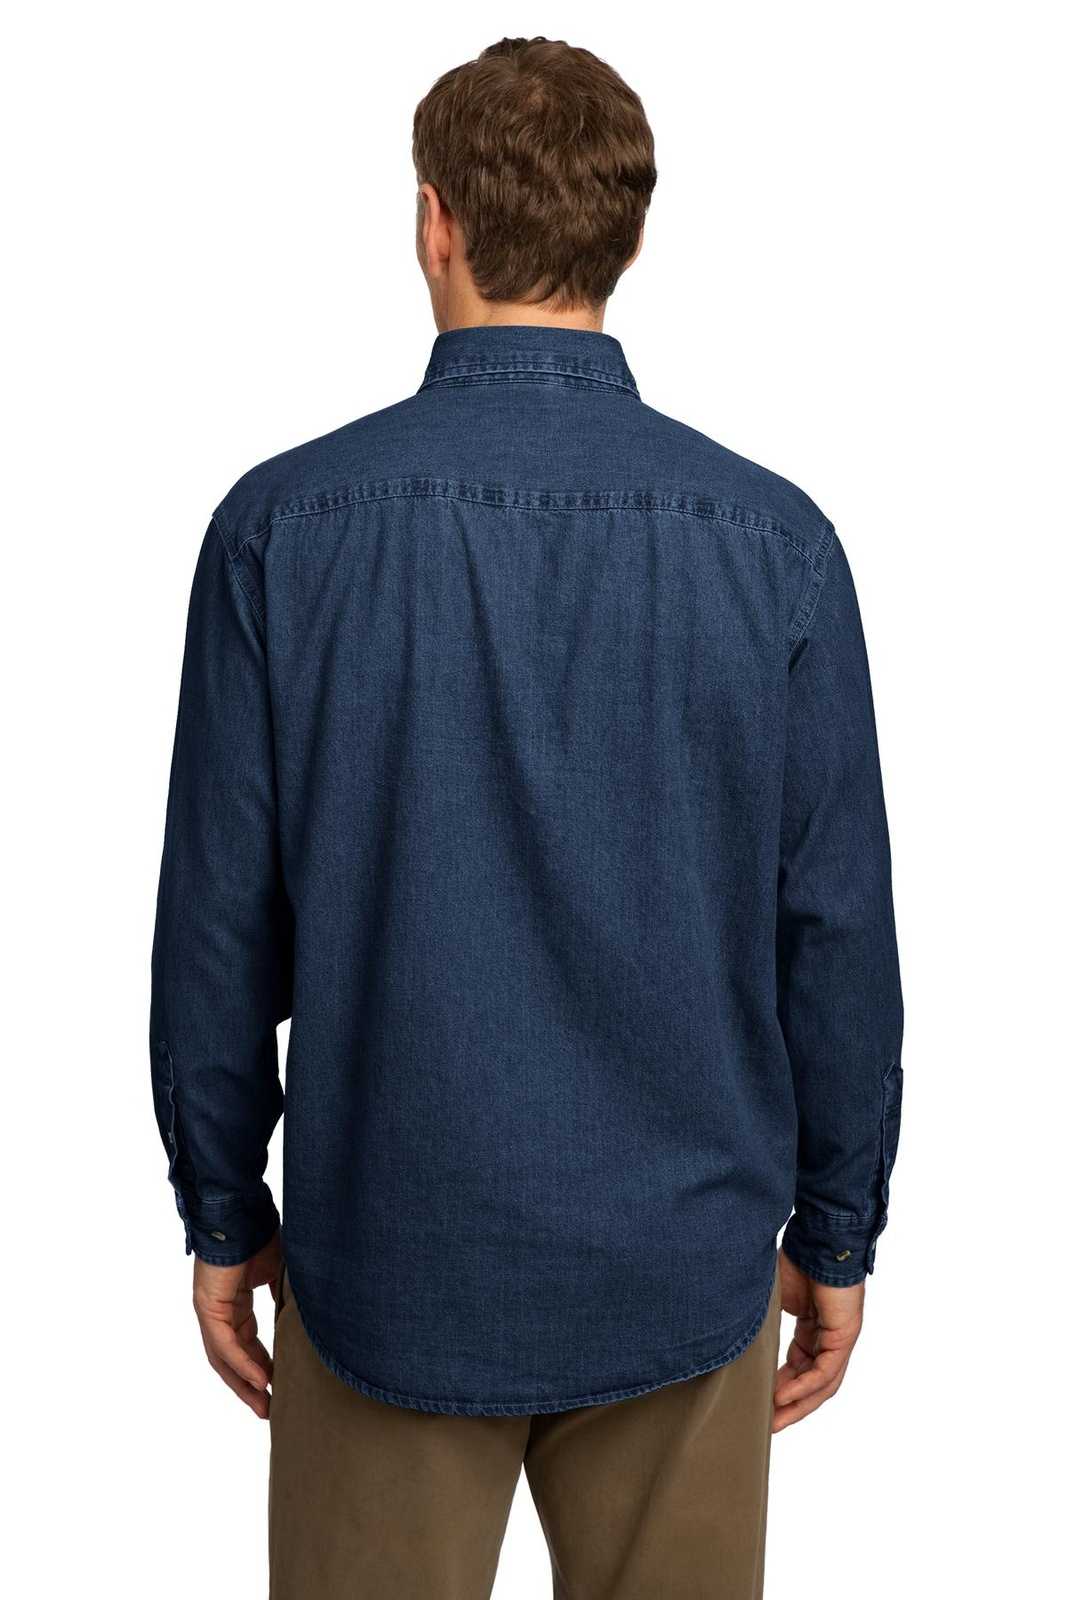 Port & Company SP10 Long Sleeve Value Denim Shirt - Ink Blue - HIT a Double - 1